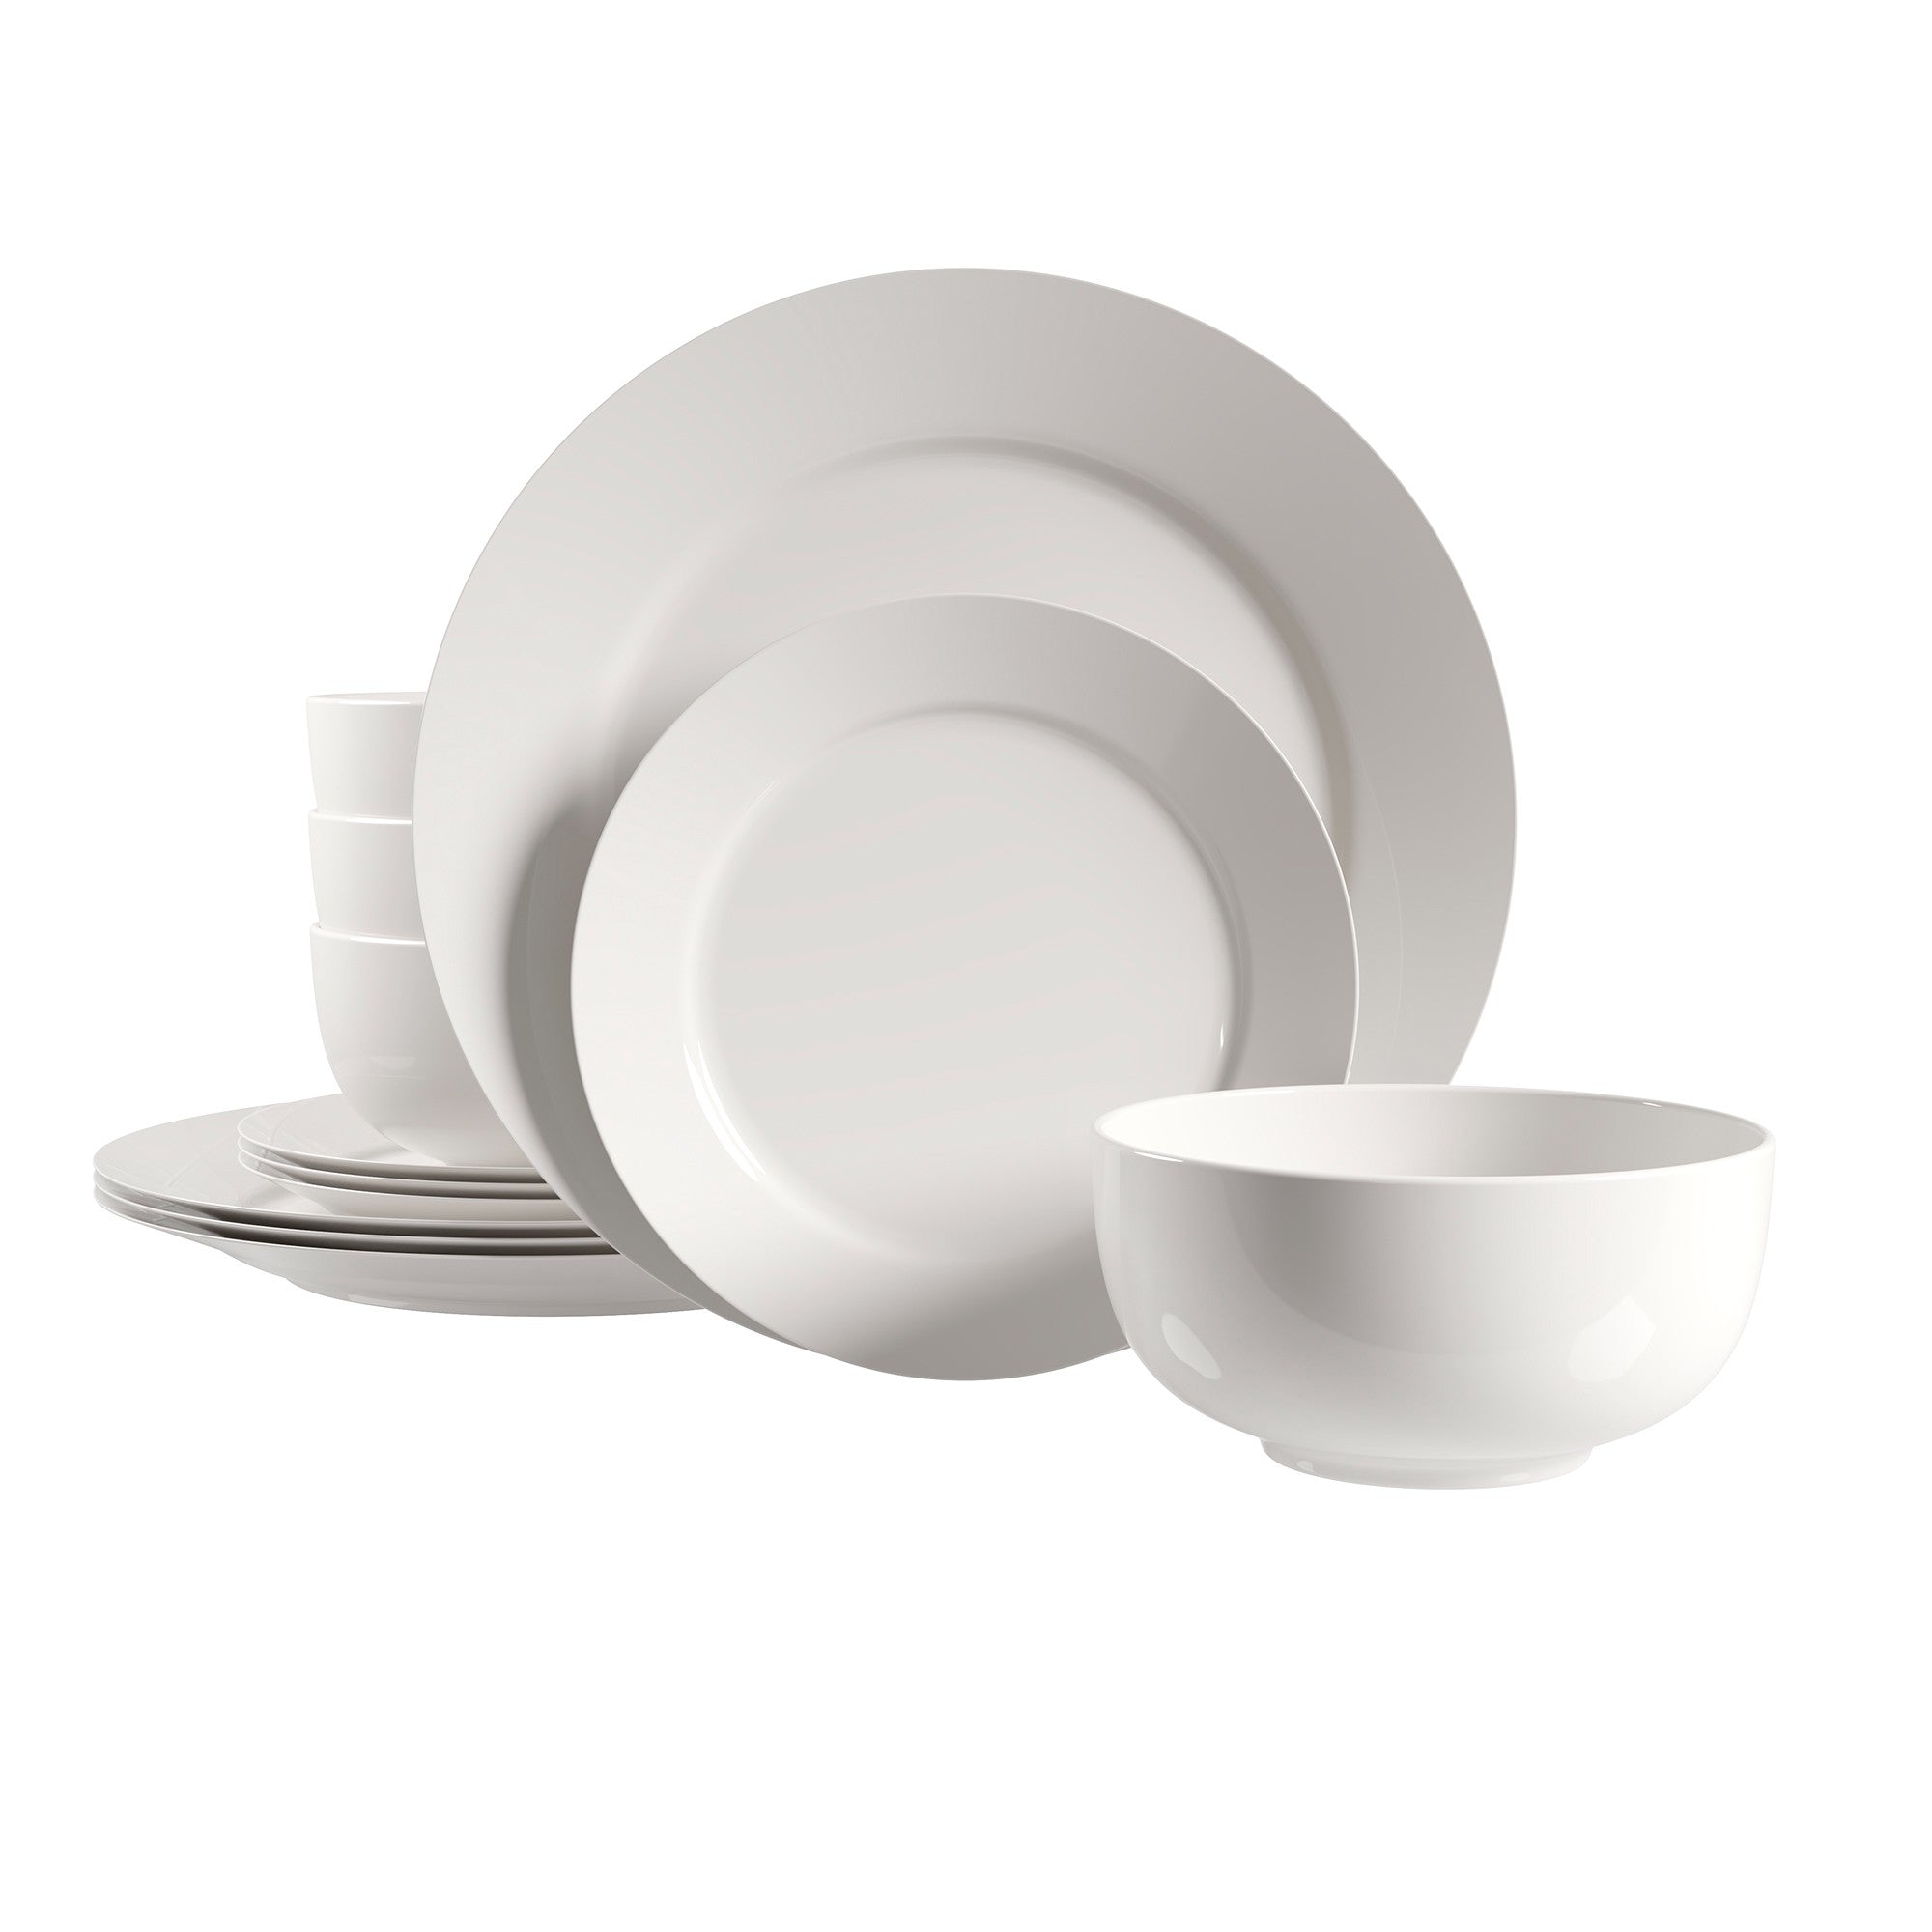 title:Safdie & Co. Dinnerset 12PC Plain White Round Rim Aspen;color:White